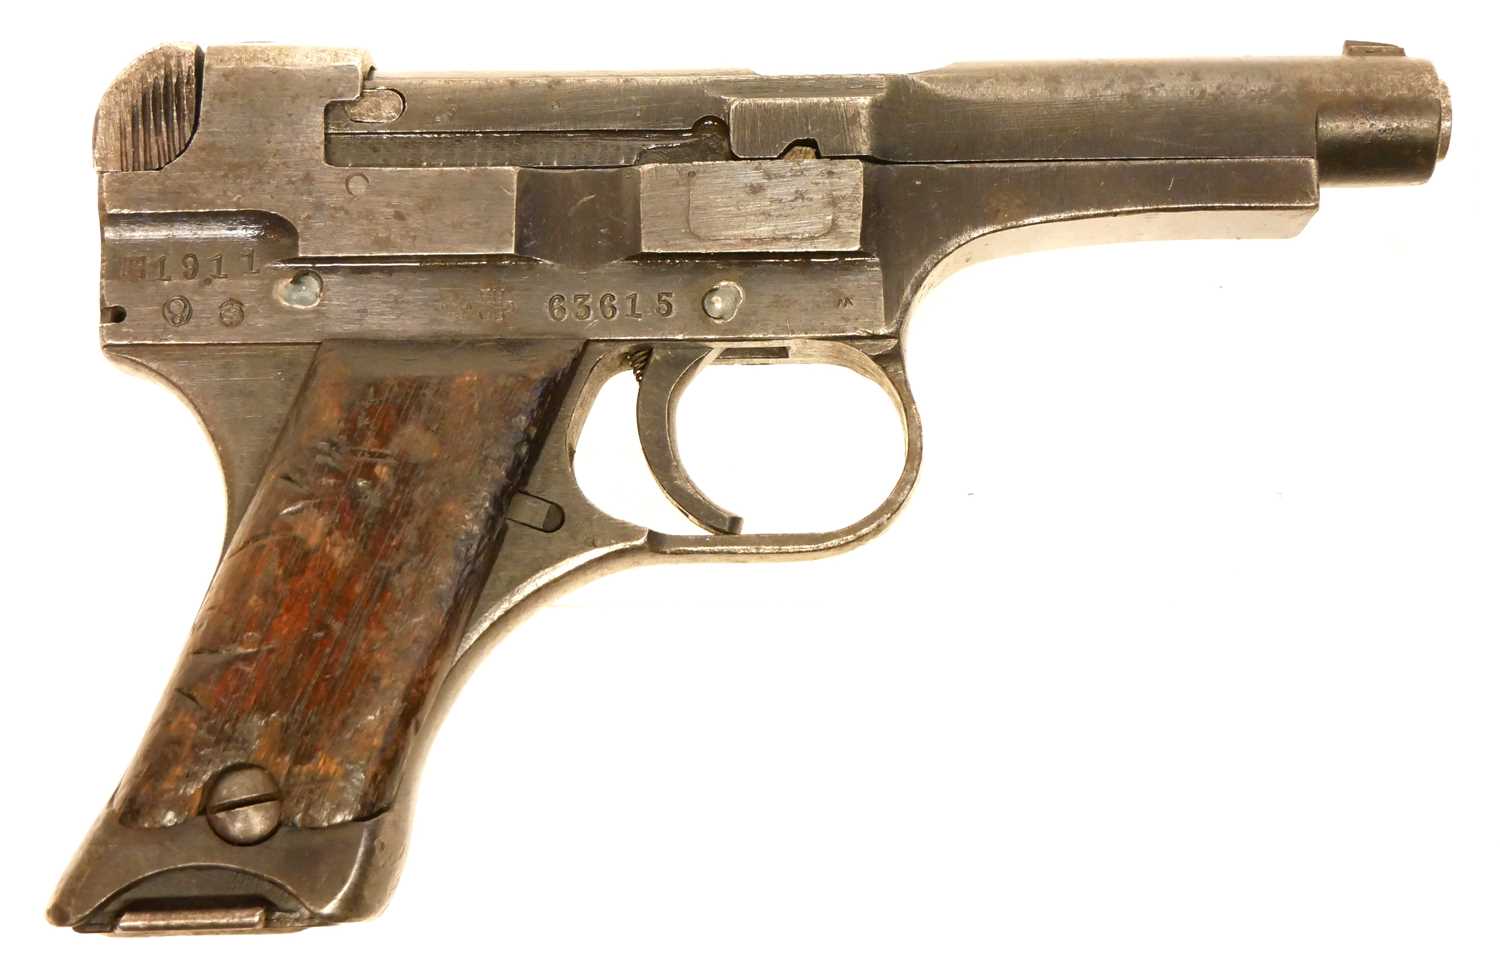 Deactivated Nambu 8mm semi automatic pistol 63615